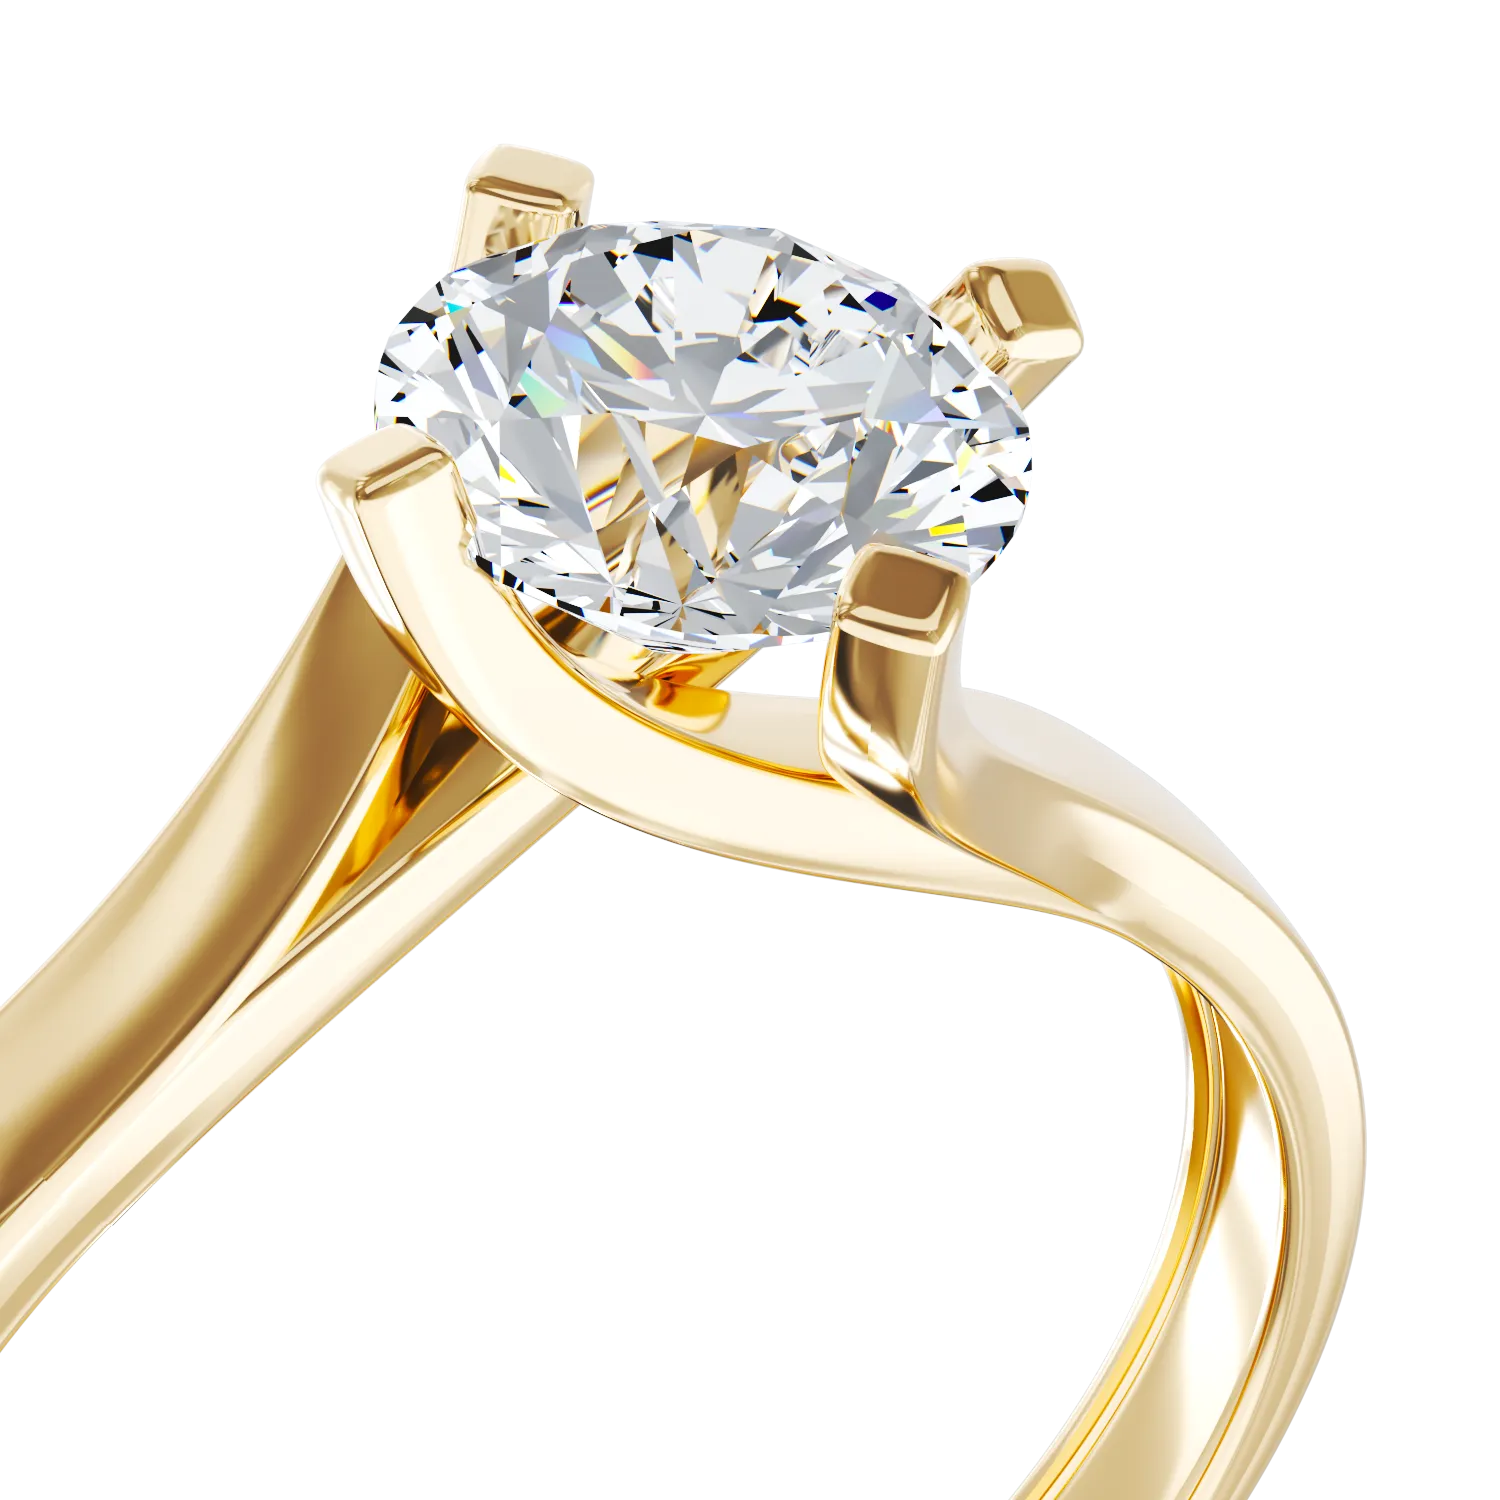 14k yellow gold engagement ring